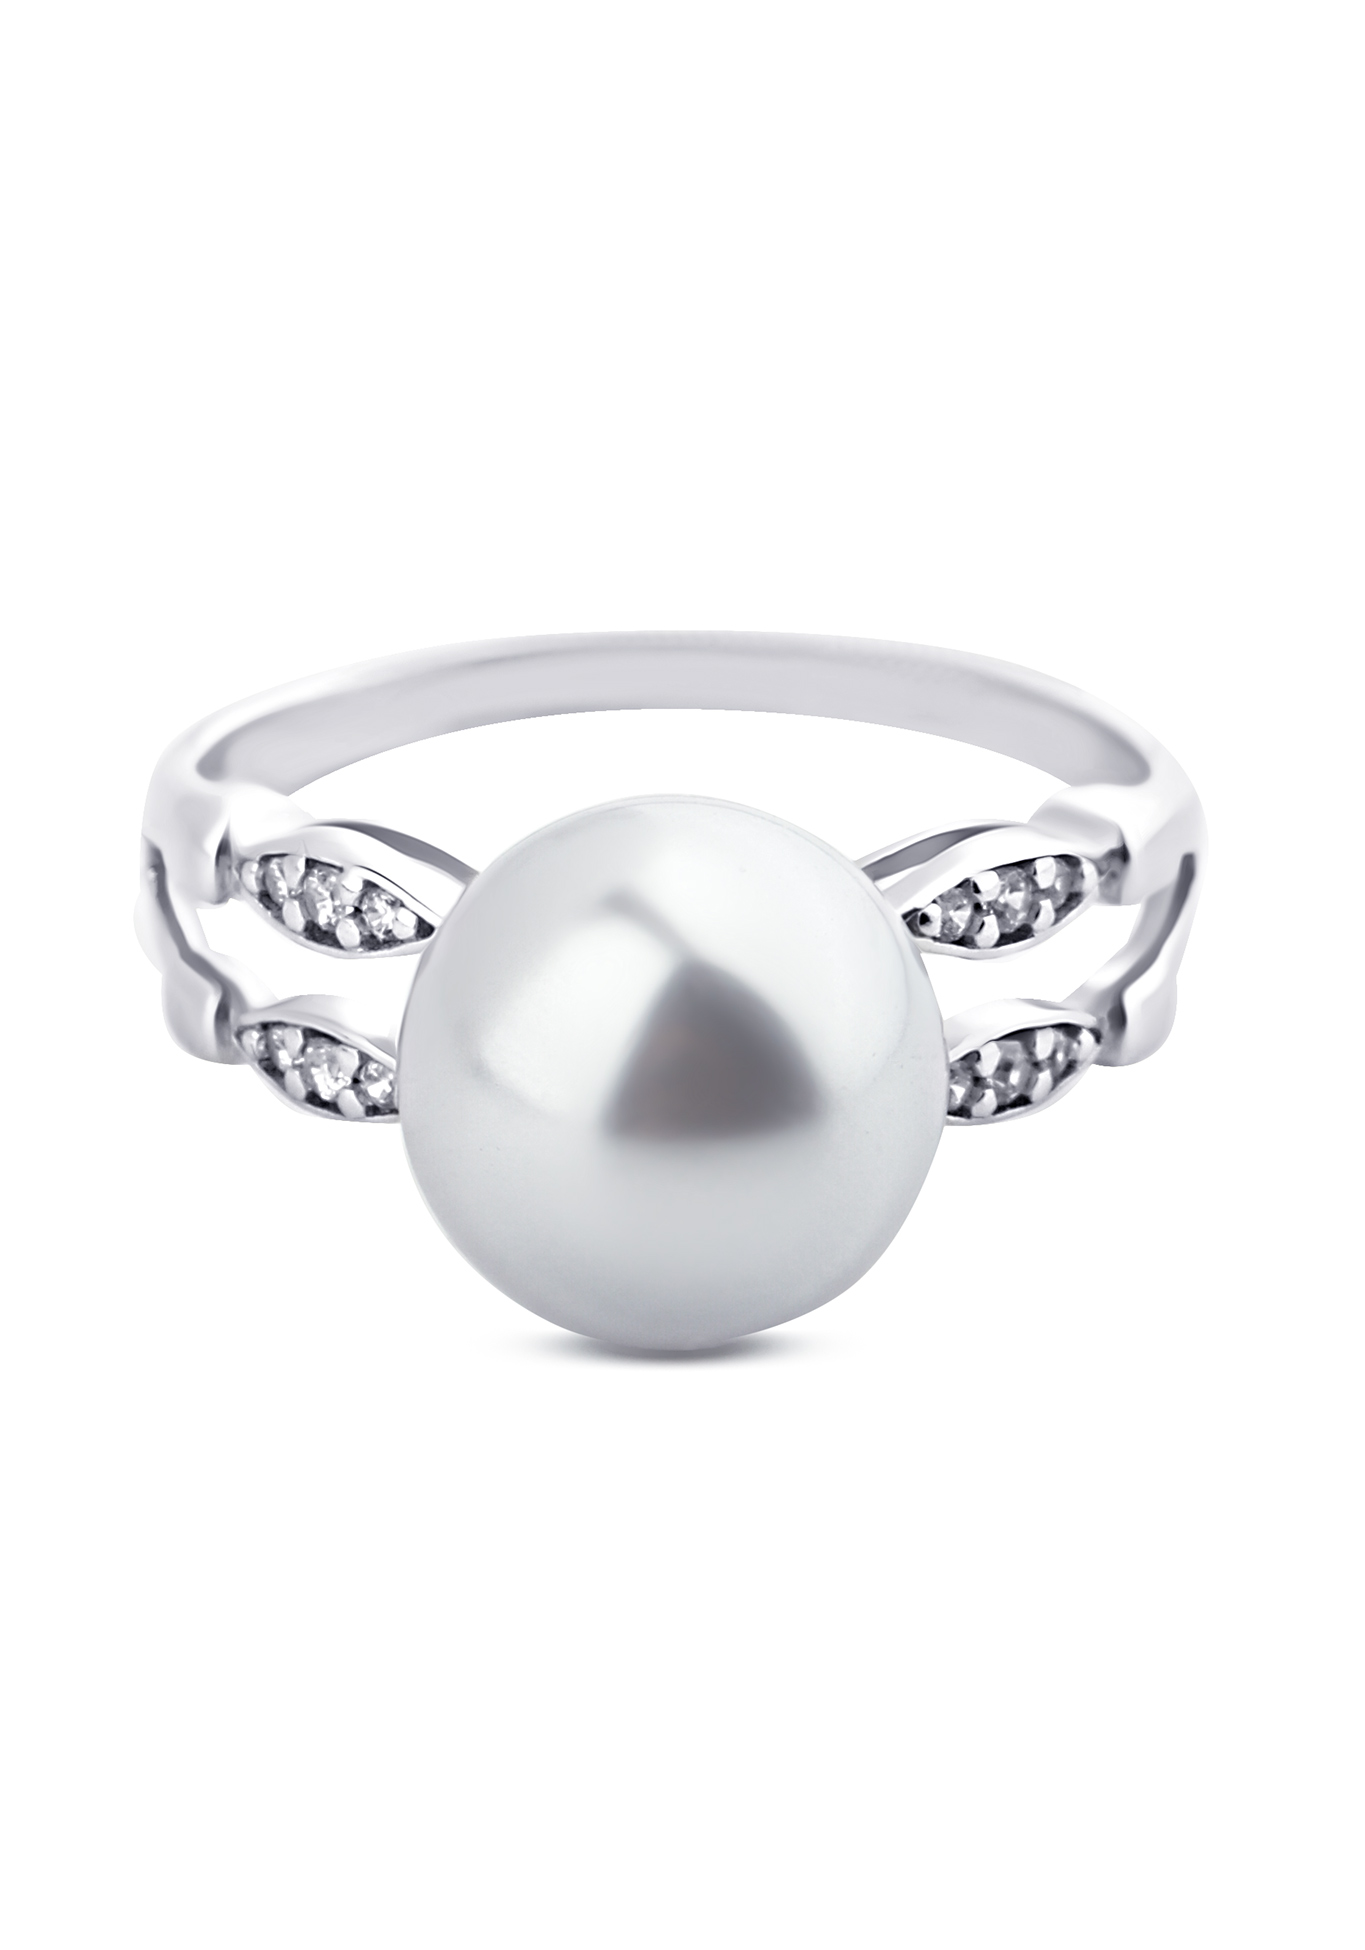 Серебряное кольцо "Николь" SOKOLOV, размер 17 солитер - фото 2